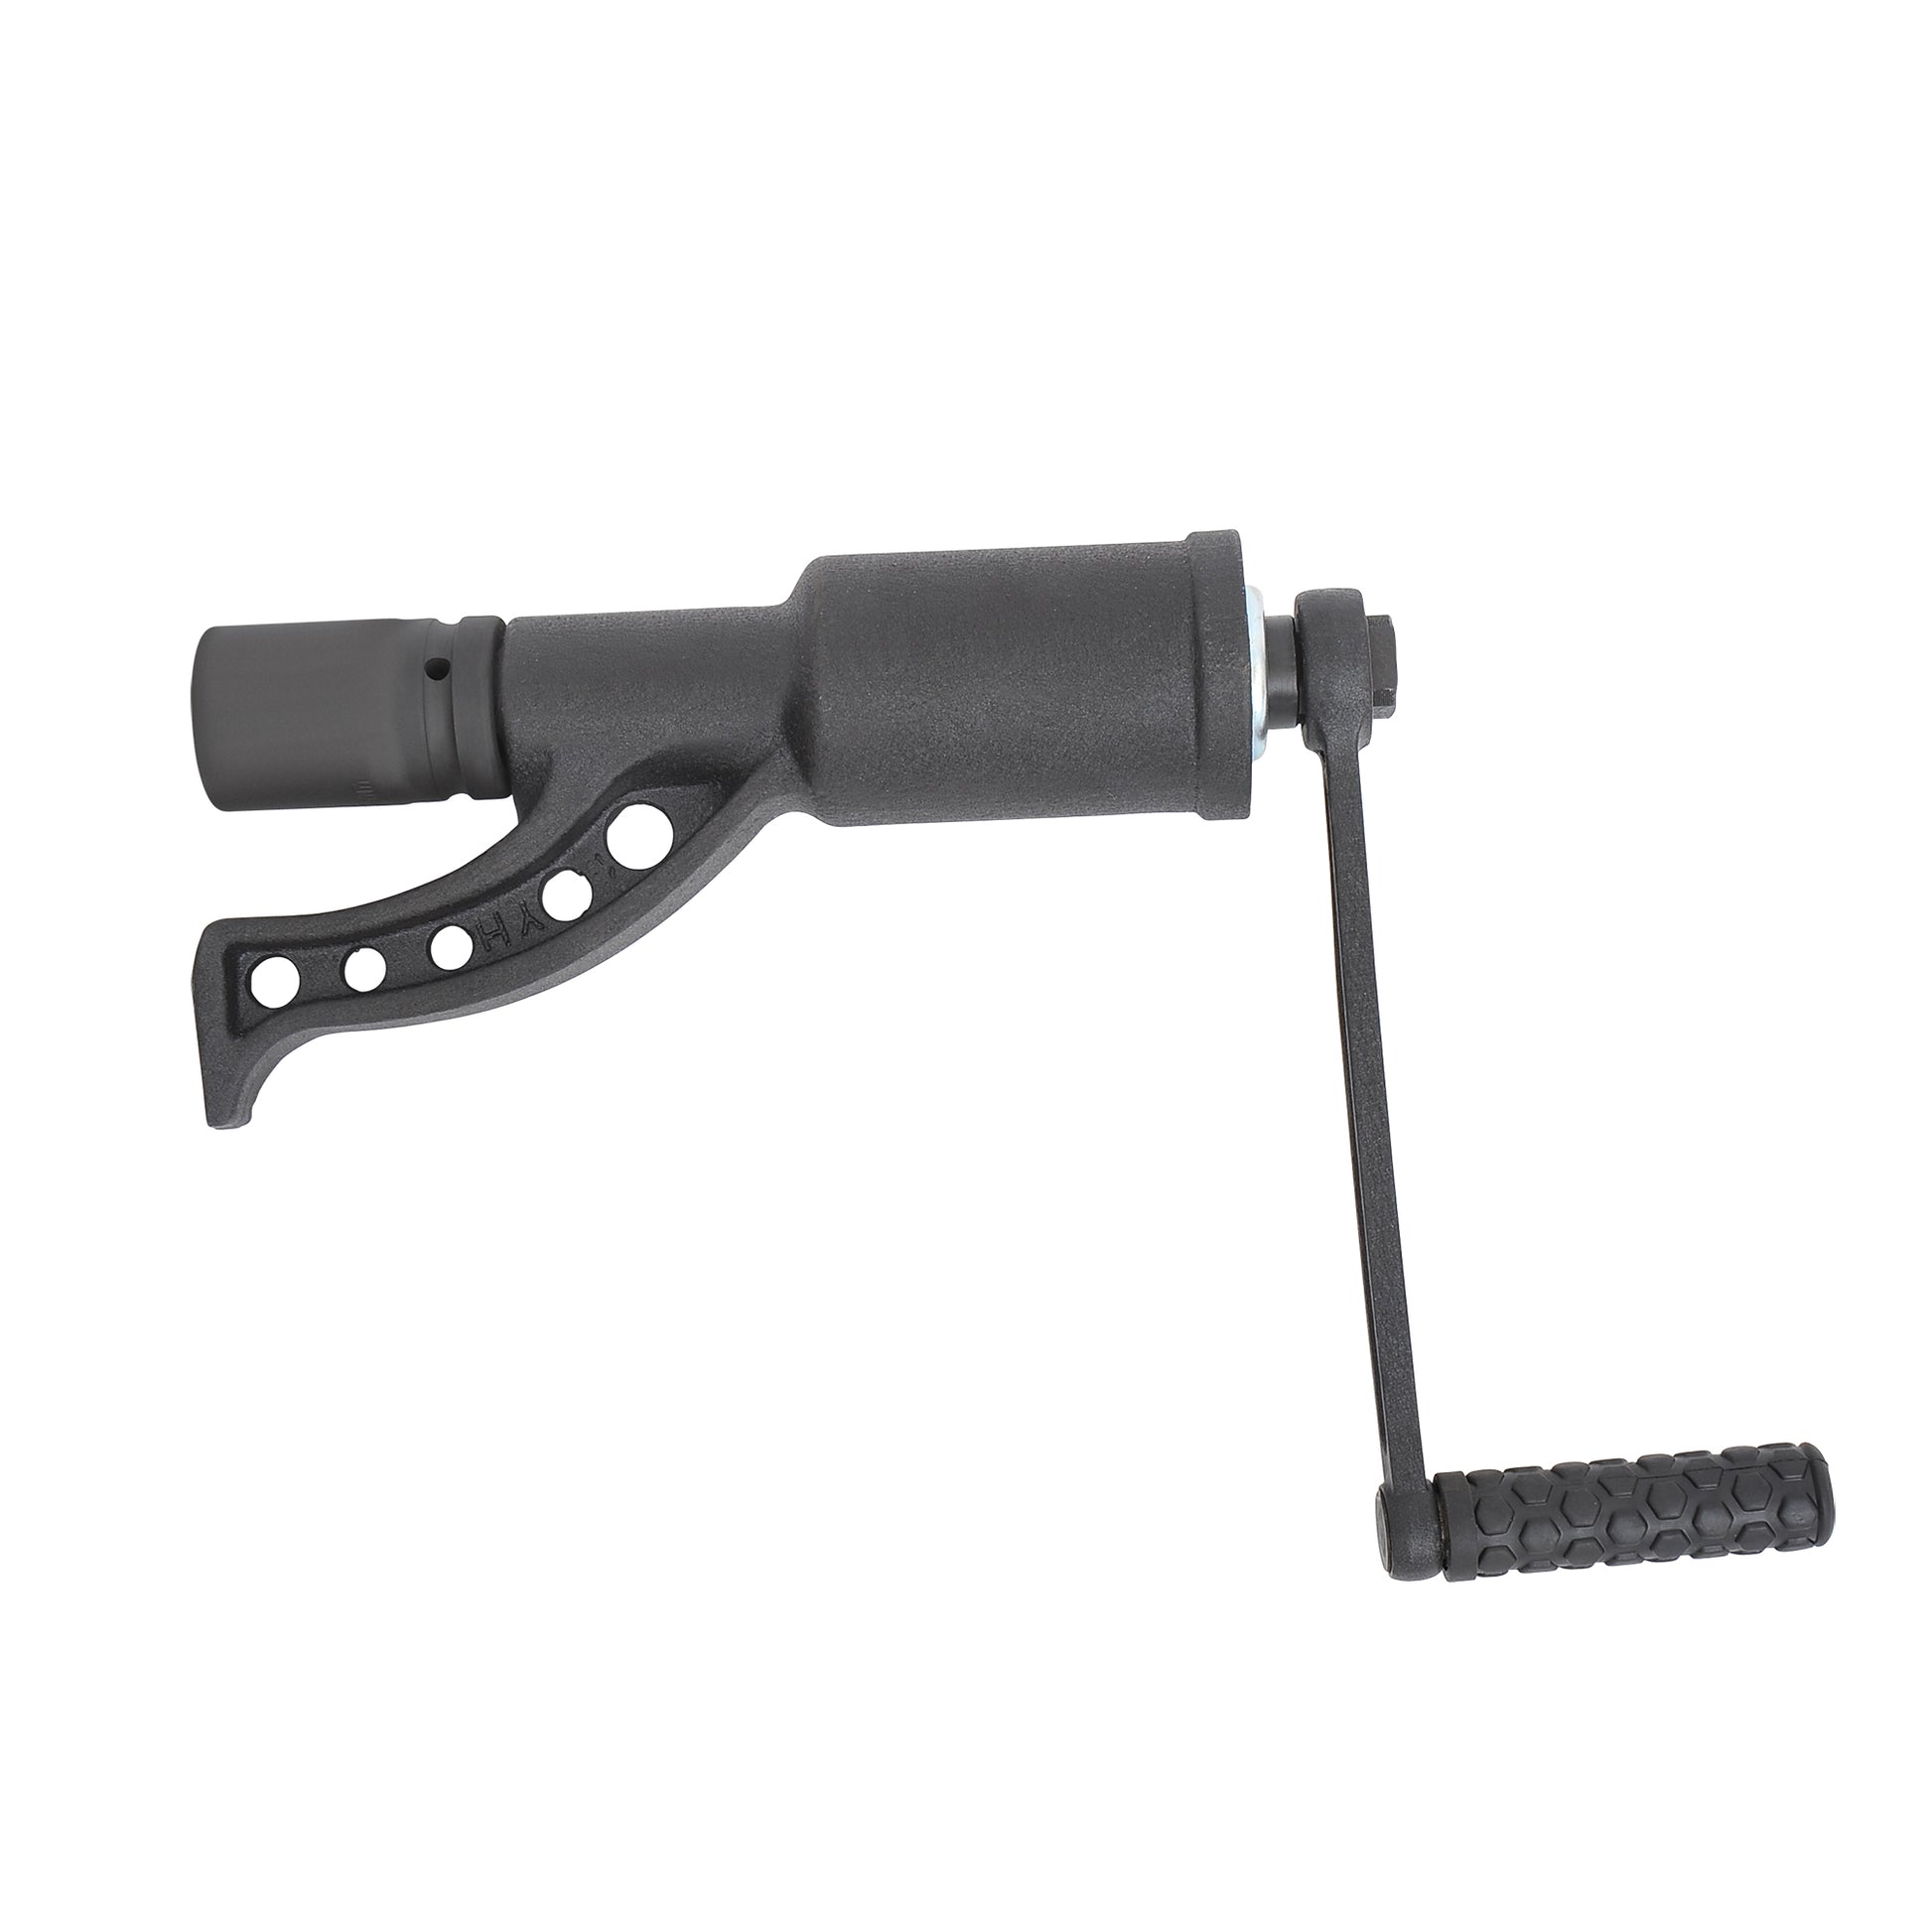 Heavy Duty Torque Multiplier Wrench Set, Amplifie